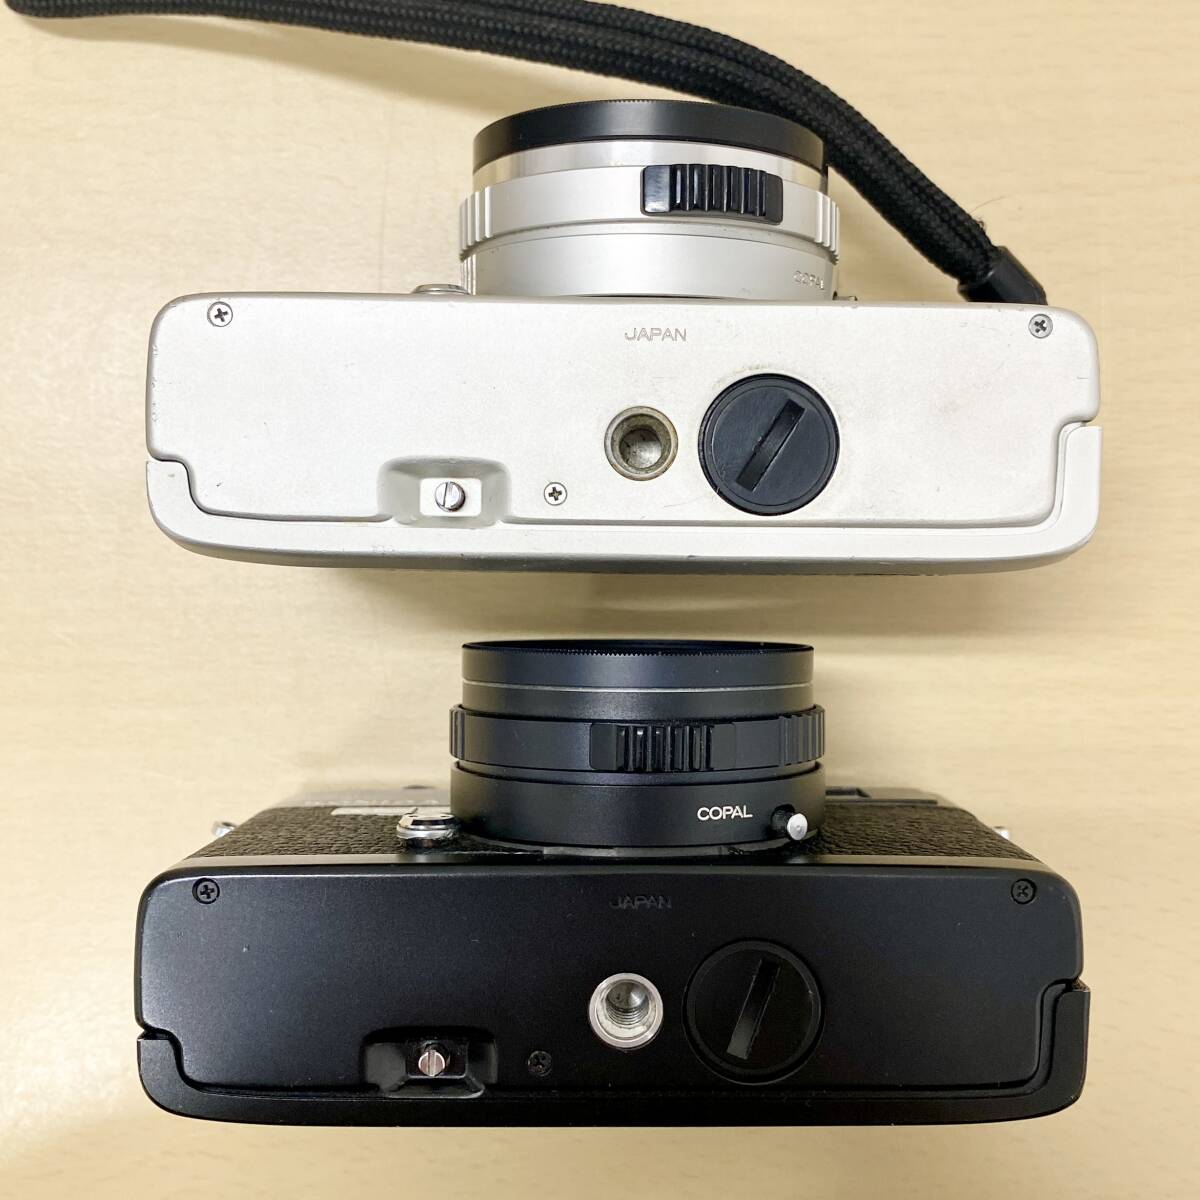 [ summarize exhibition ] 2 pcs Konica C35 Flashmatic silver black Konica film camera compact camera operation not yet verification junk treatment secondhand goods 